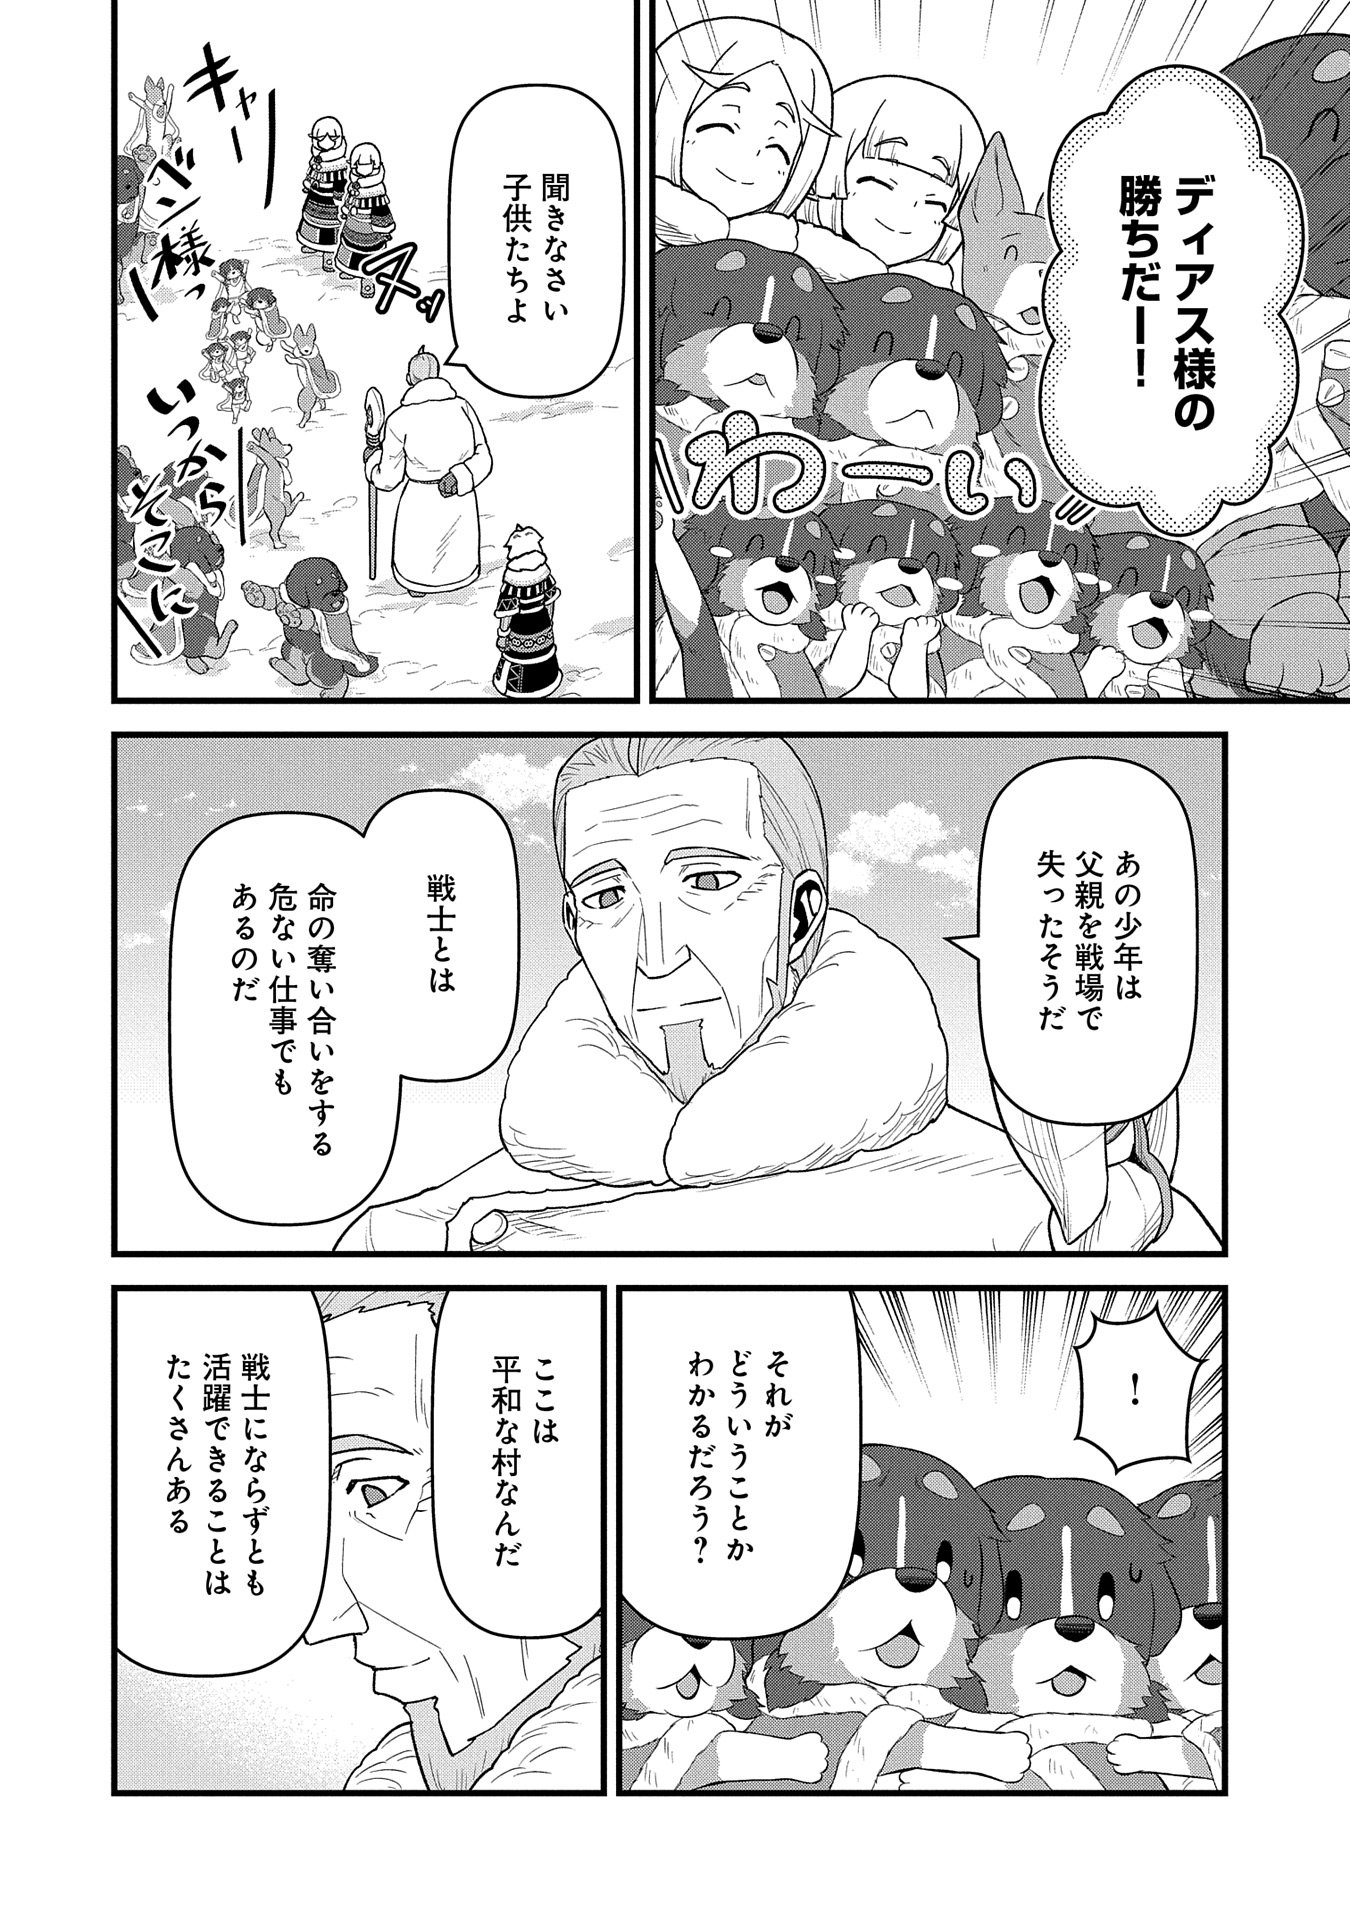 Ryoumin 0-nin Start no Henkyou Ryoushusama - Chapter 55 - Page 24